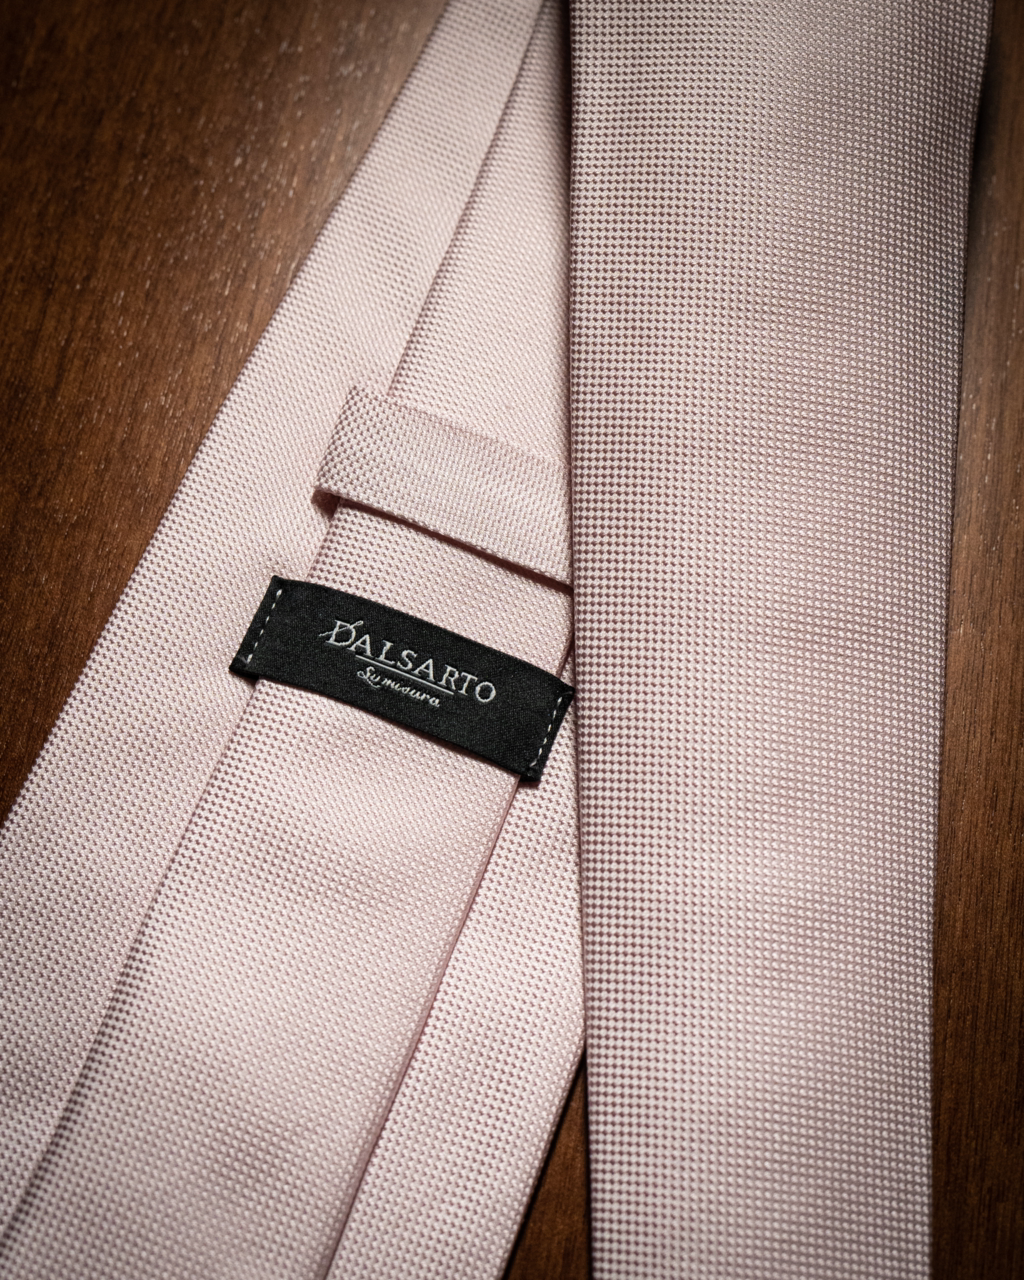 Agostino Pink Tie